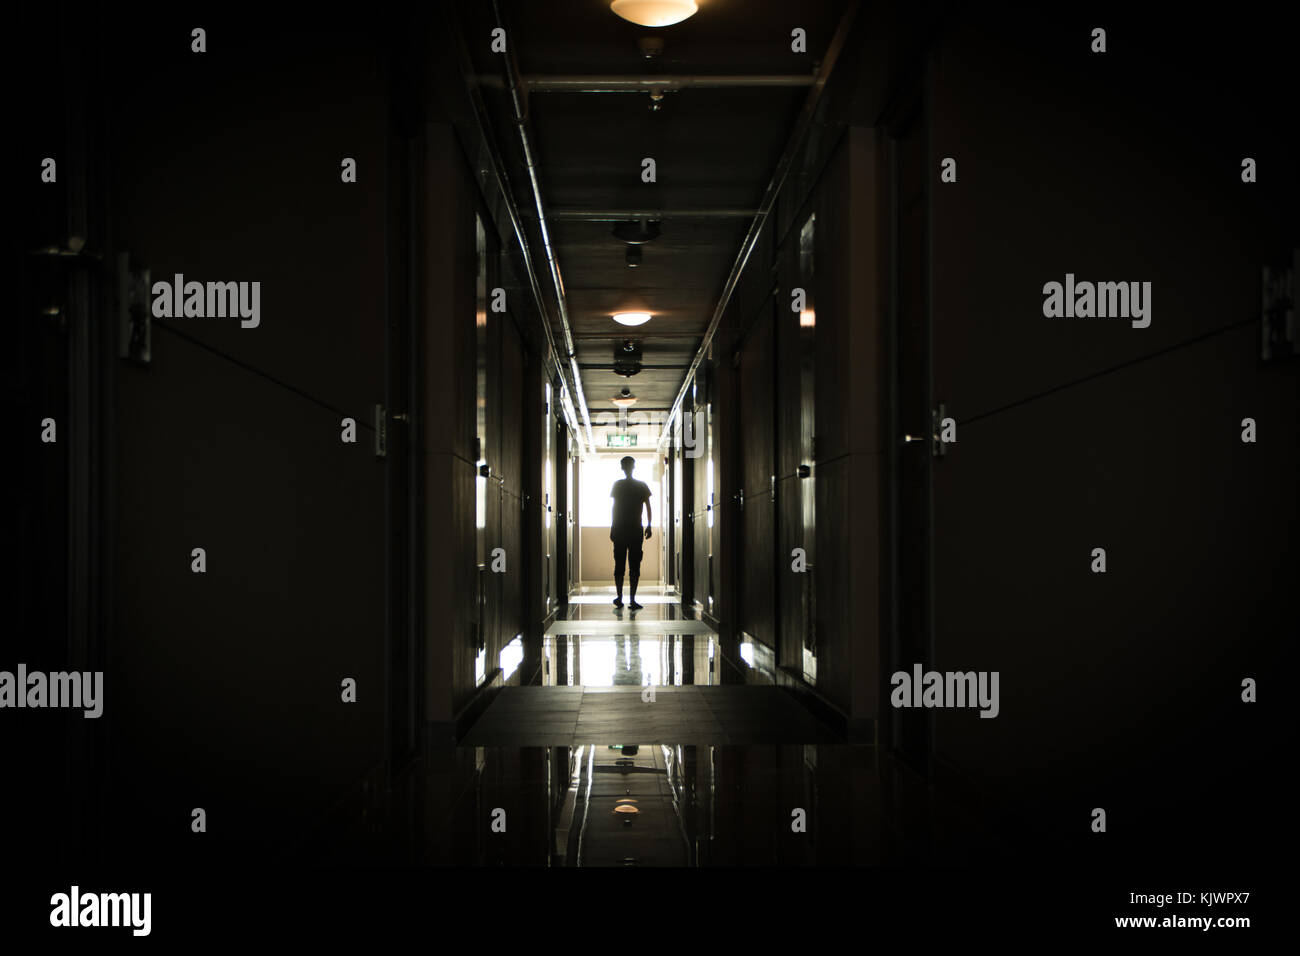 Man walking down a long dark corridor Stock Photo